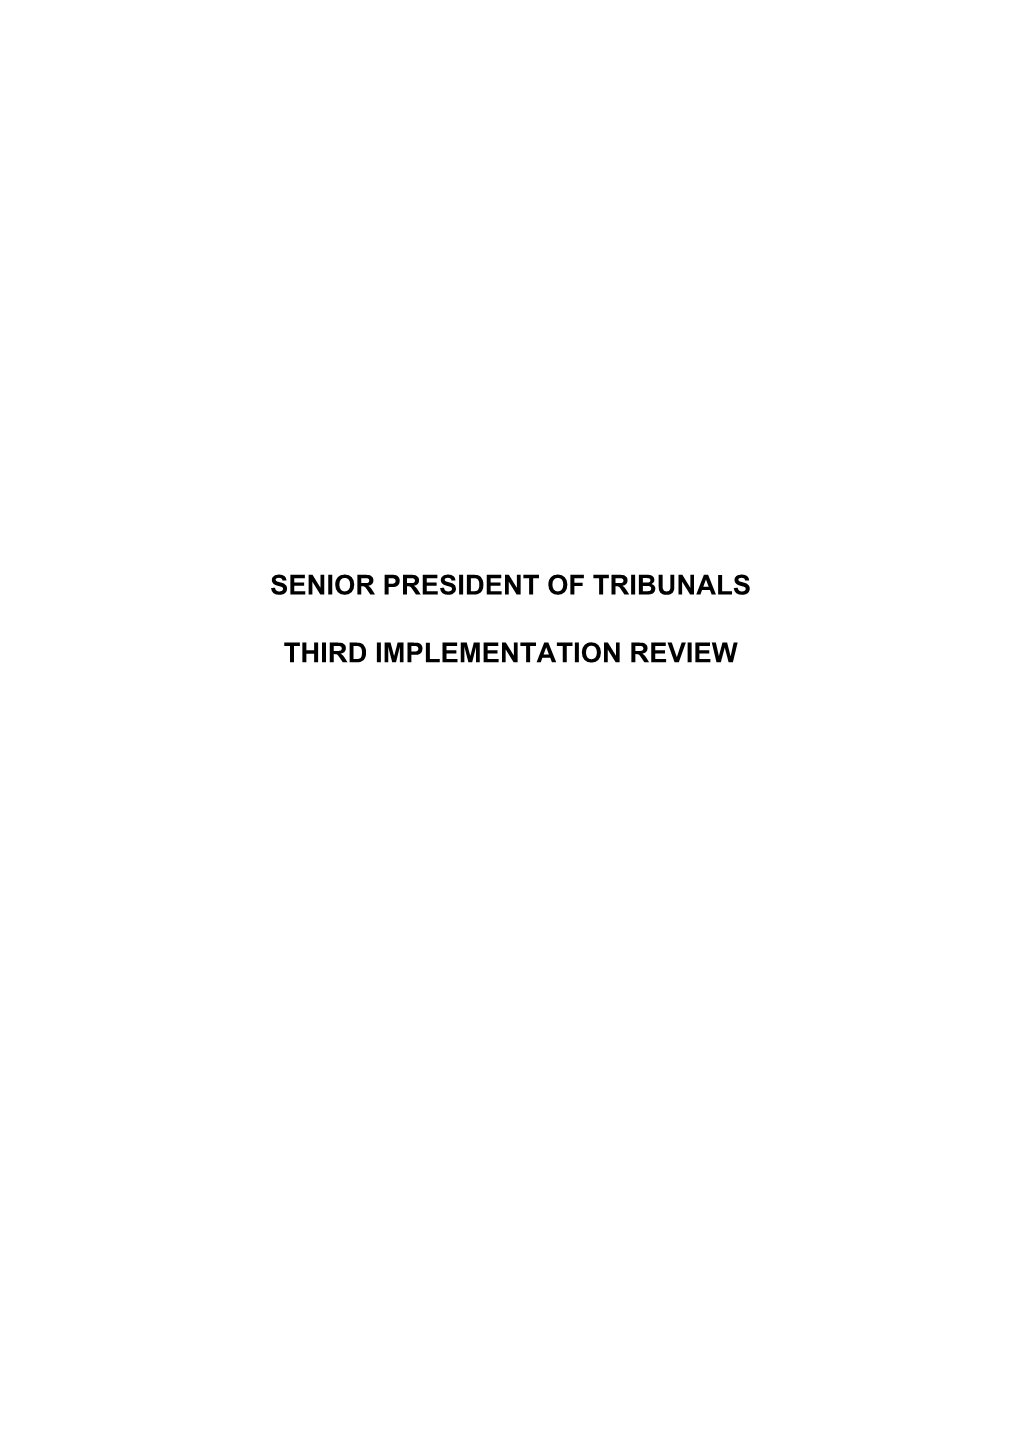 Senior President of Tribunals Third Implementation Review